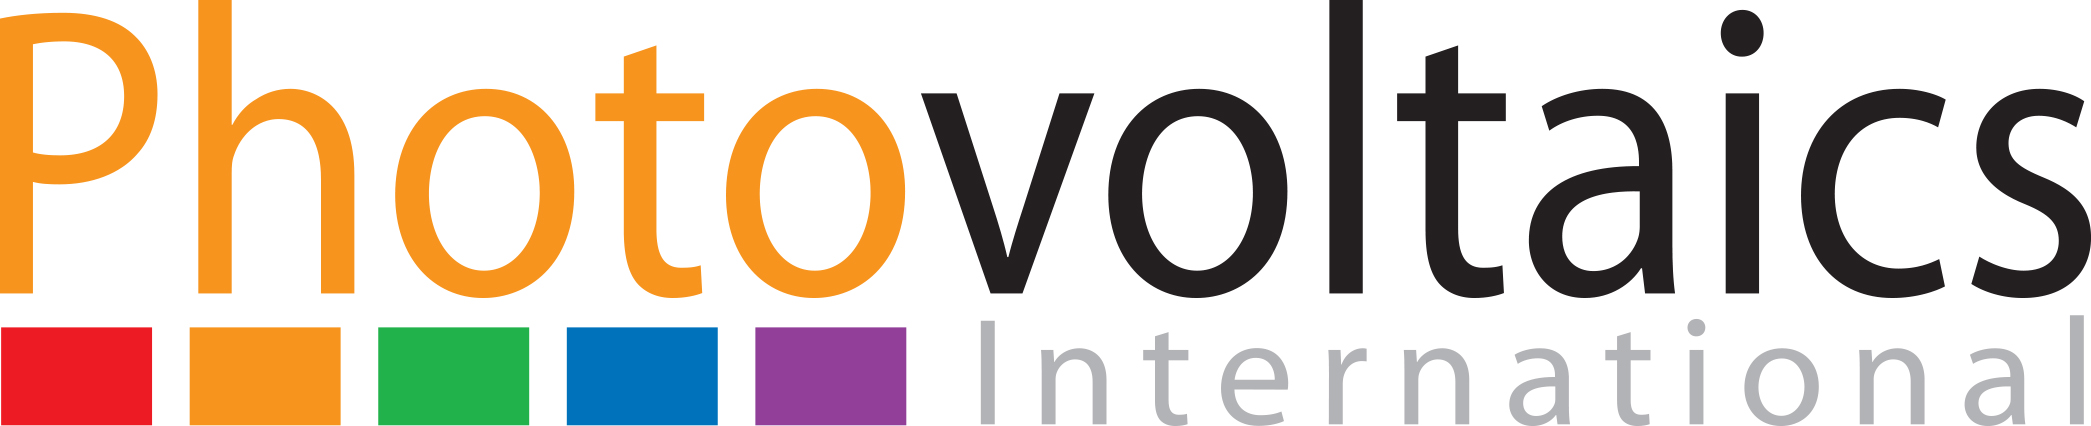 PVI logo outlines